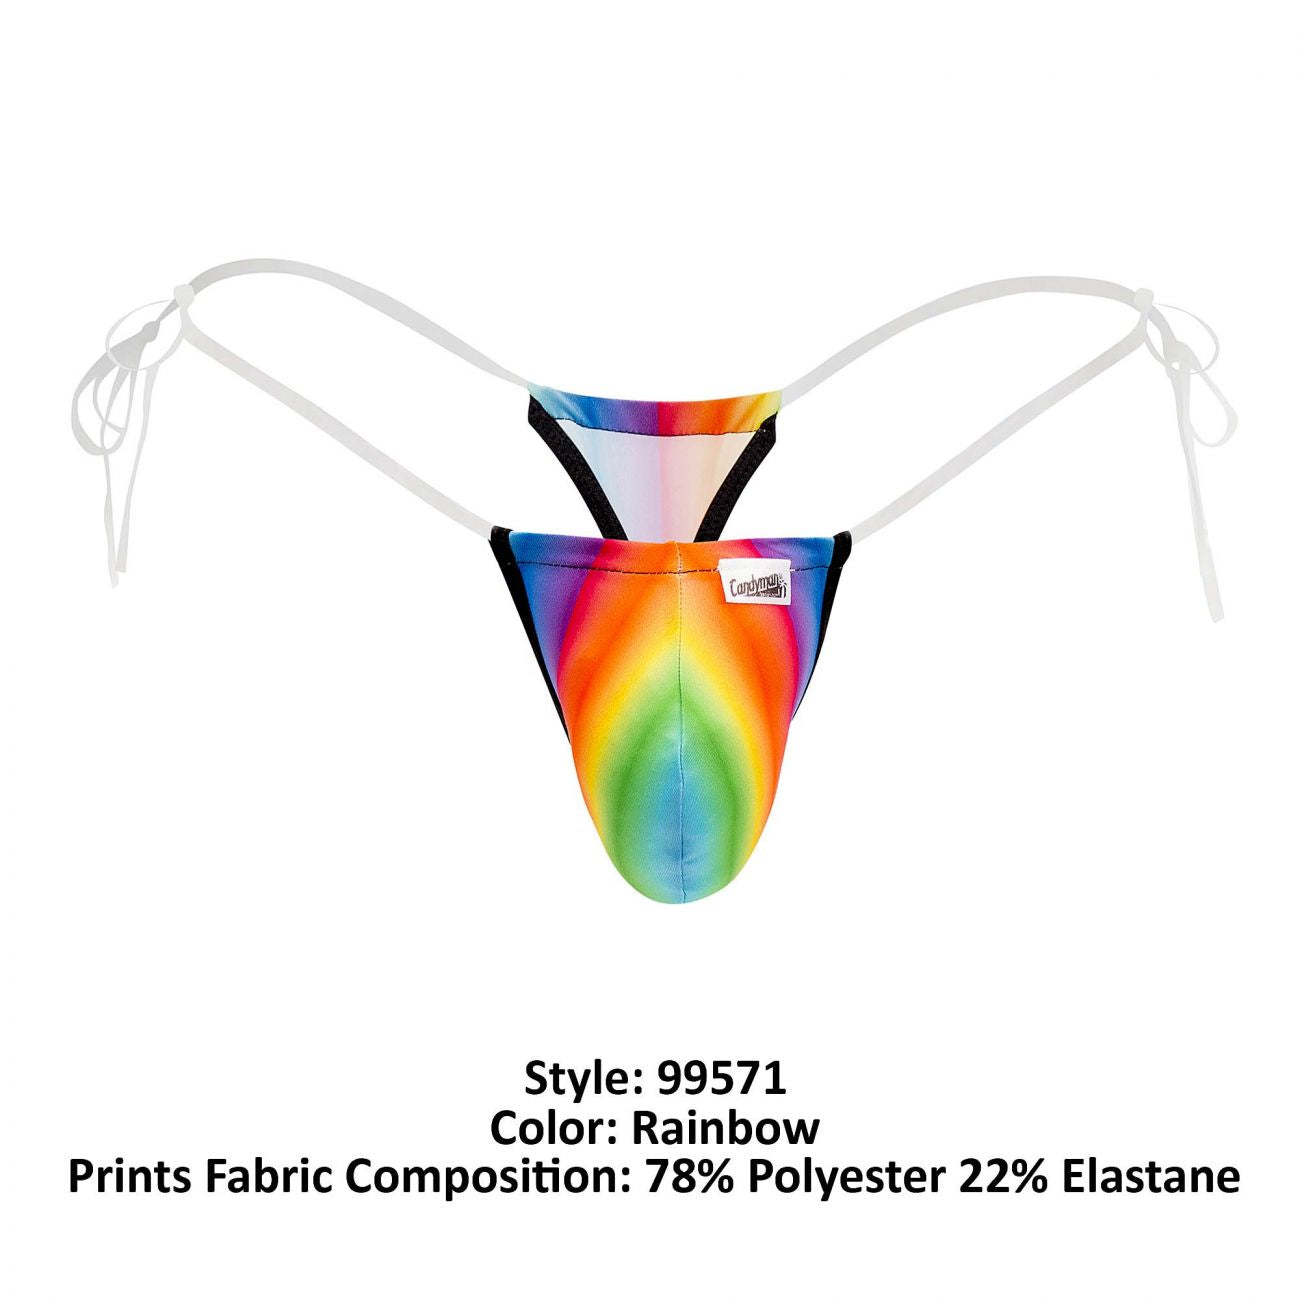 JCSTK - CandyMan 99571 Invisible Strap Micro G-String Rainbow Print